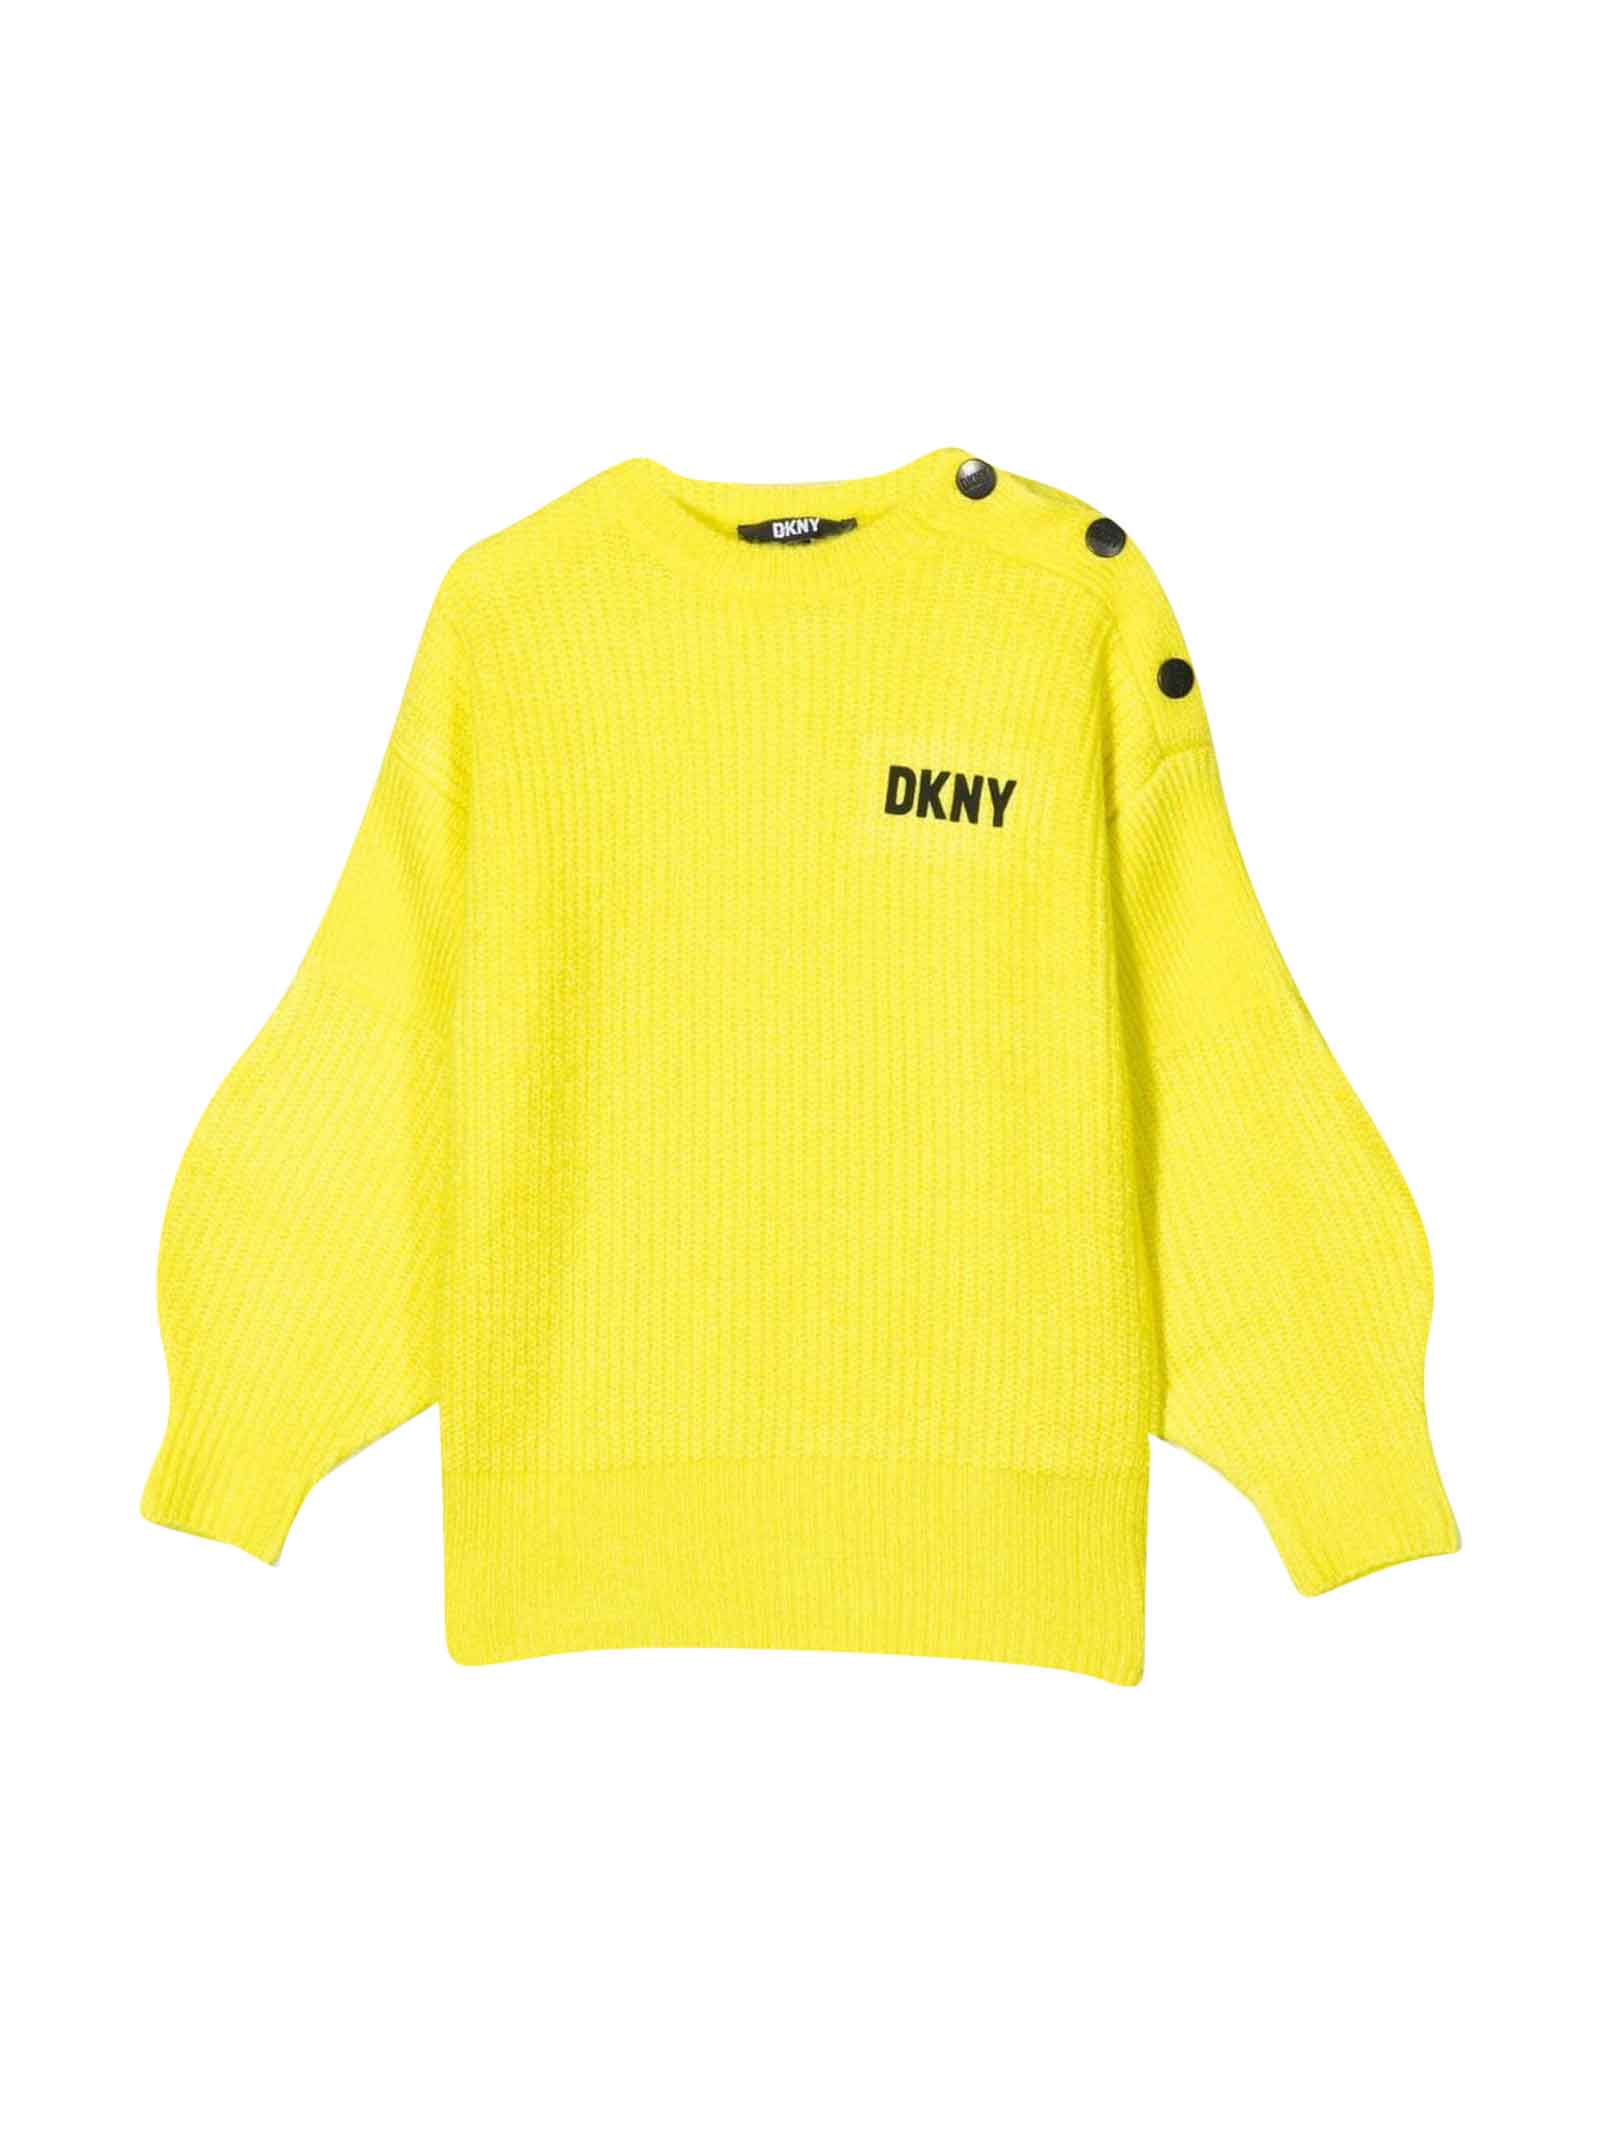 DKNY Yellow Sweater Unisex